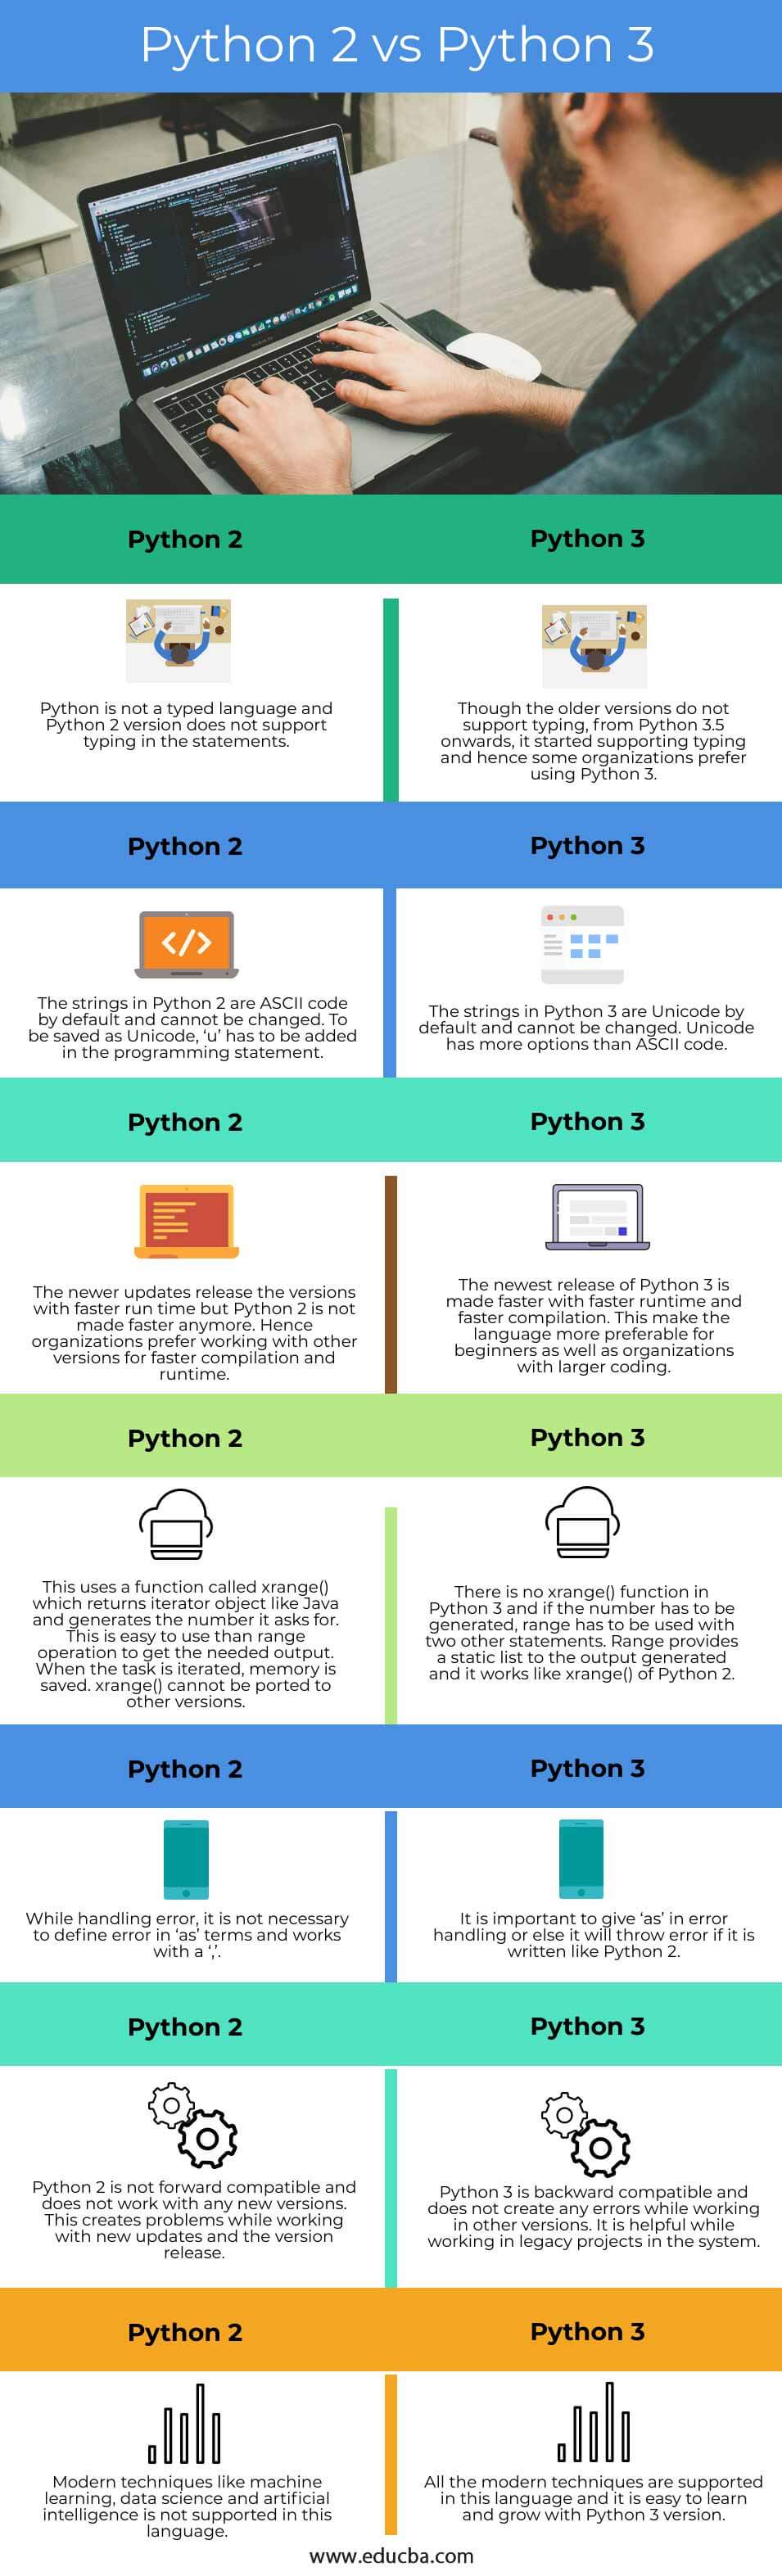 Python-2-vs-Python-3-info